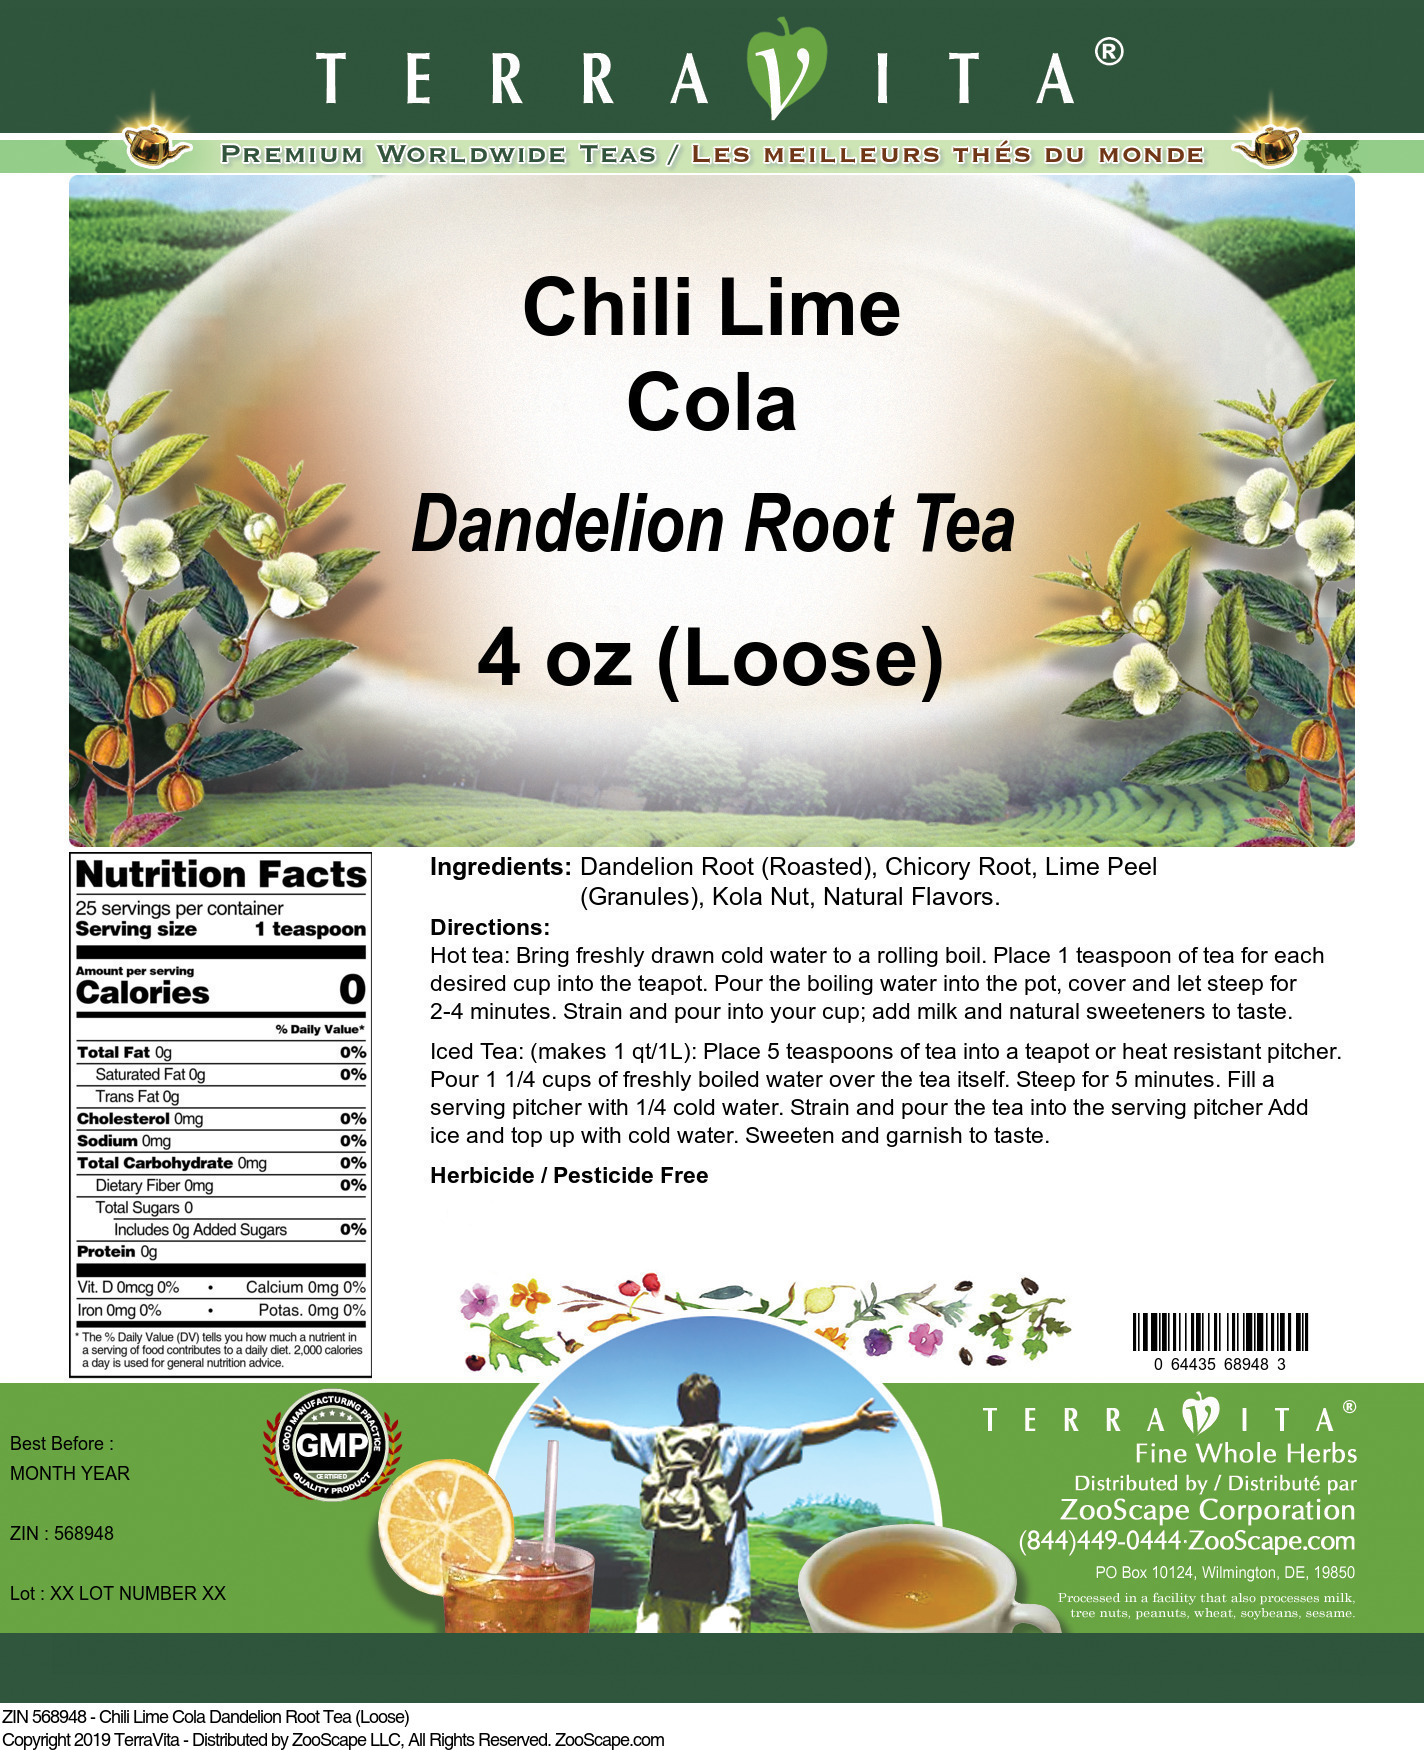 Chili Lime Cola Dandelion Root Tea (Loose) - Label